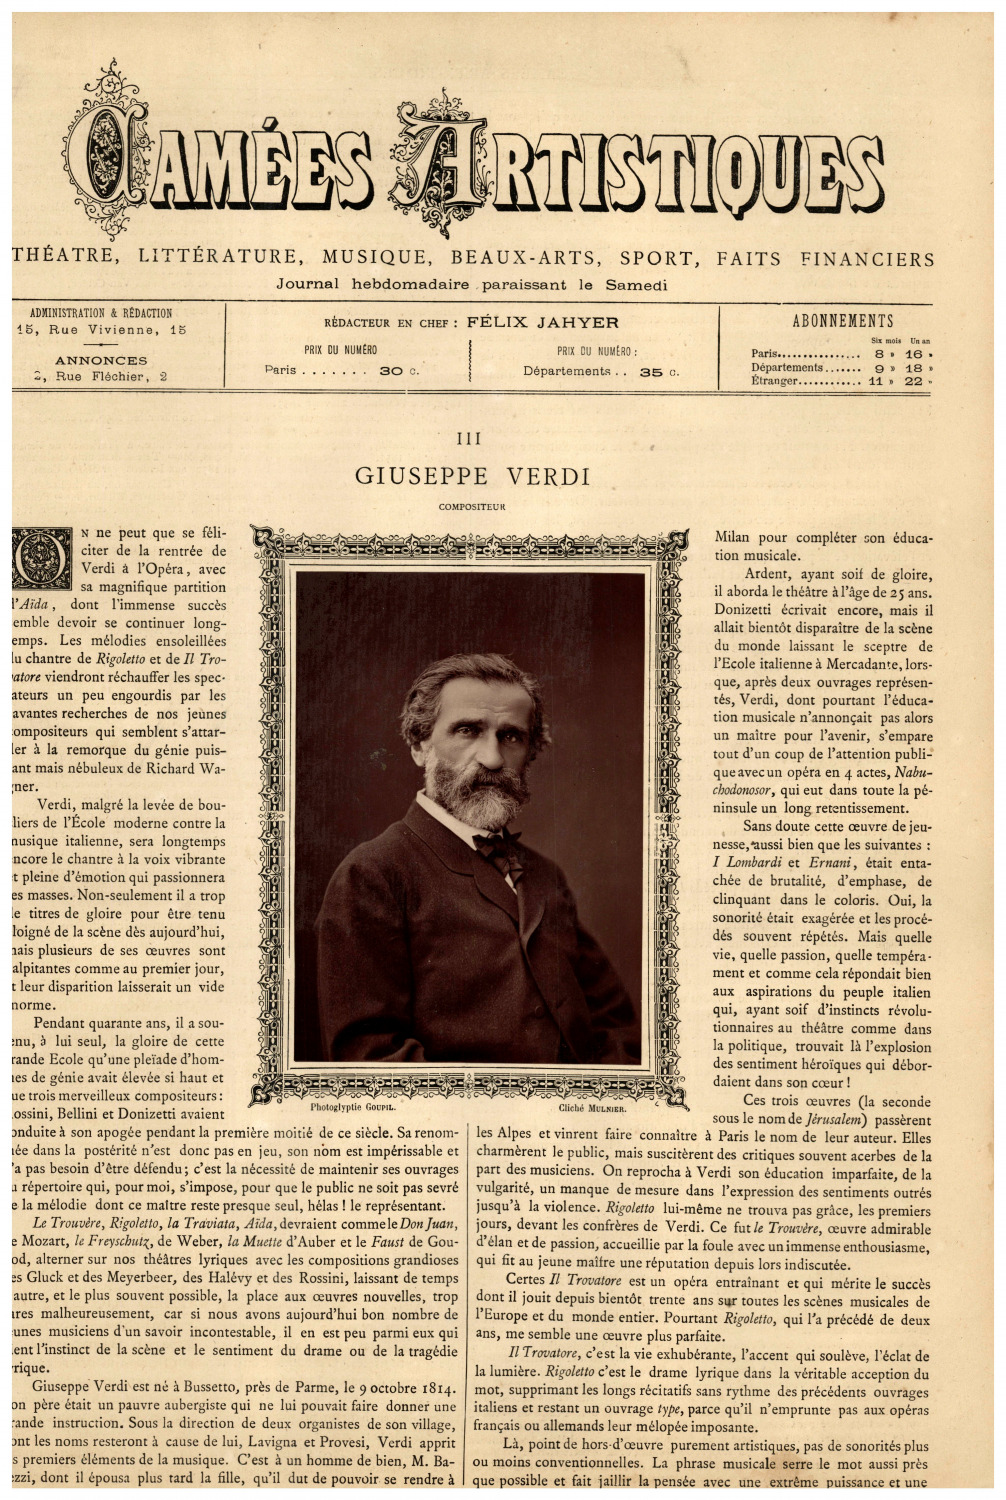 Goupil, artistic cameos, Giuseppe Verdi (composer) vintage print, print print d